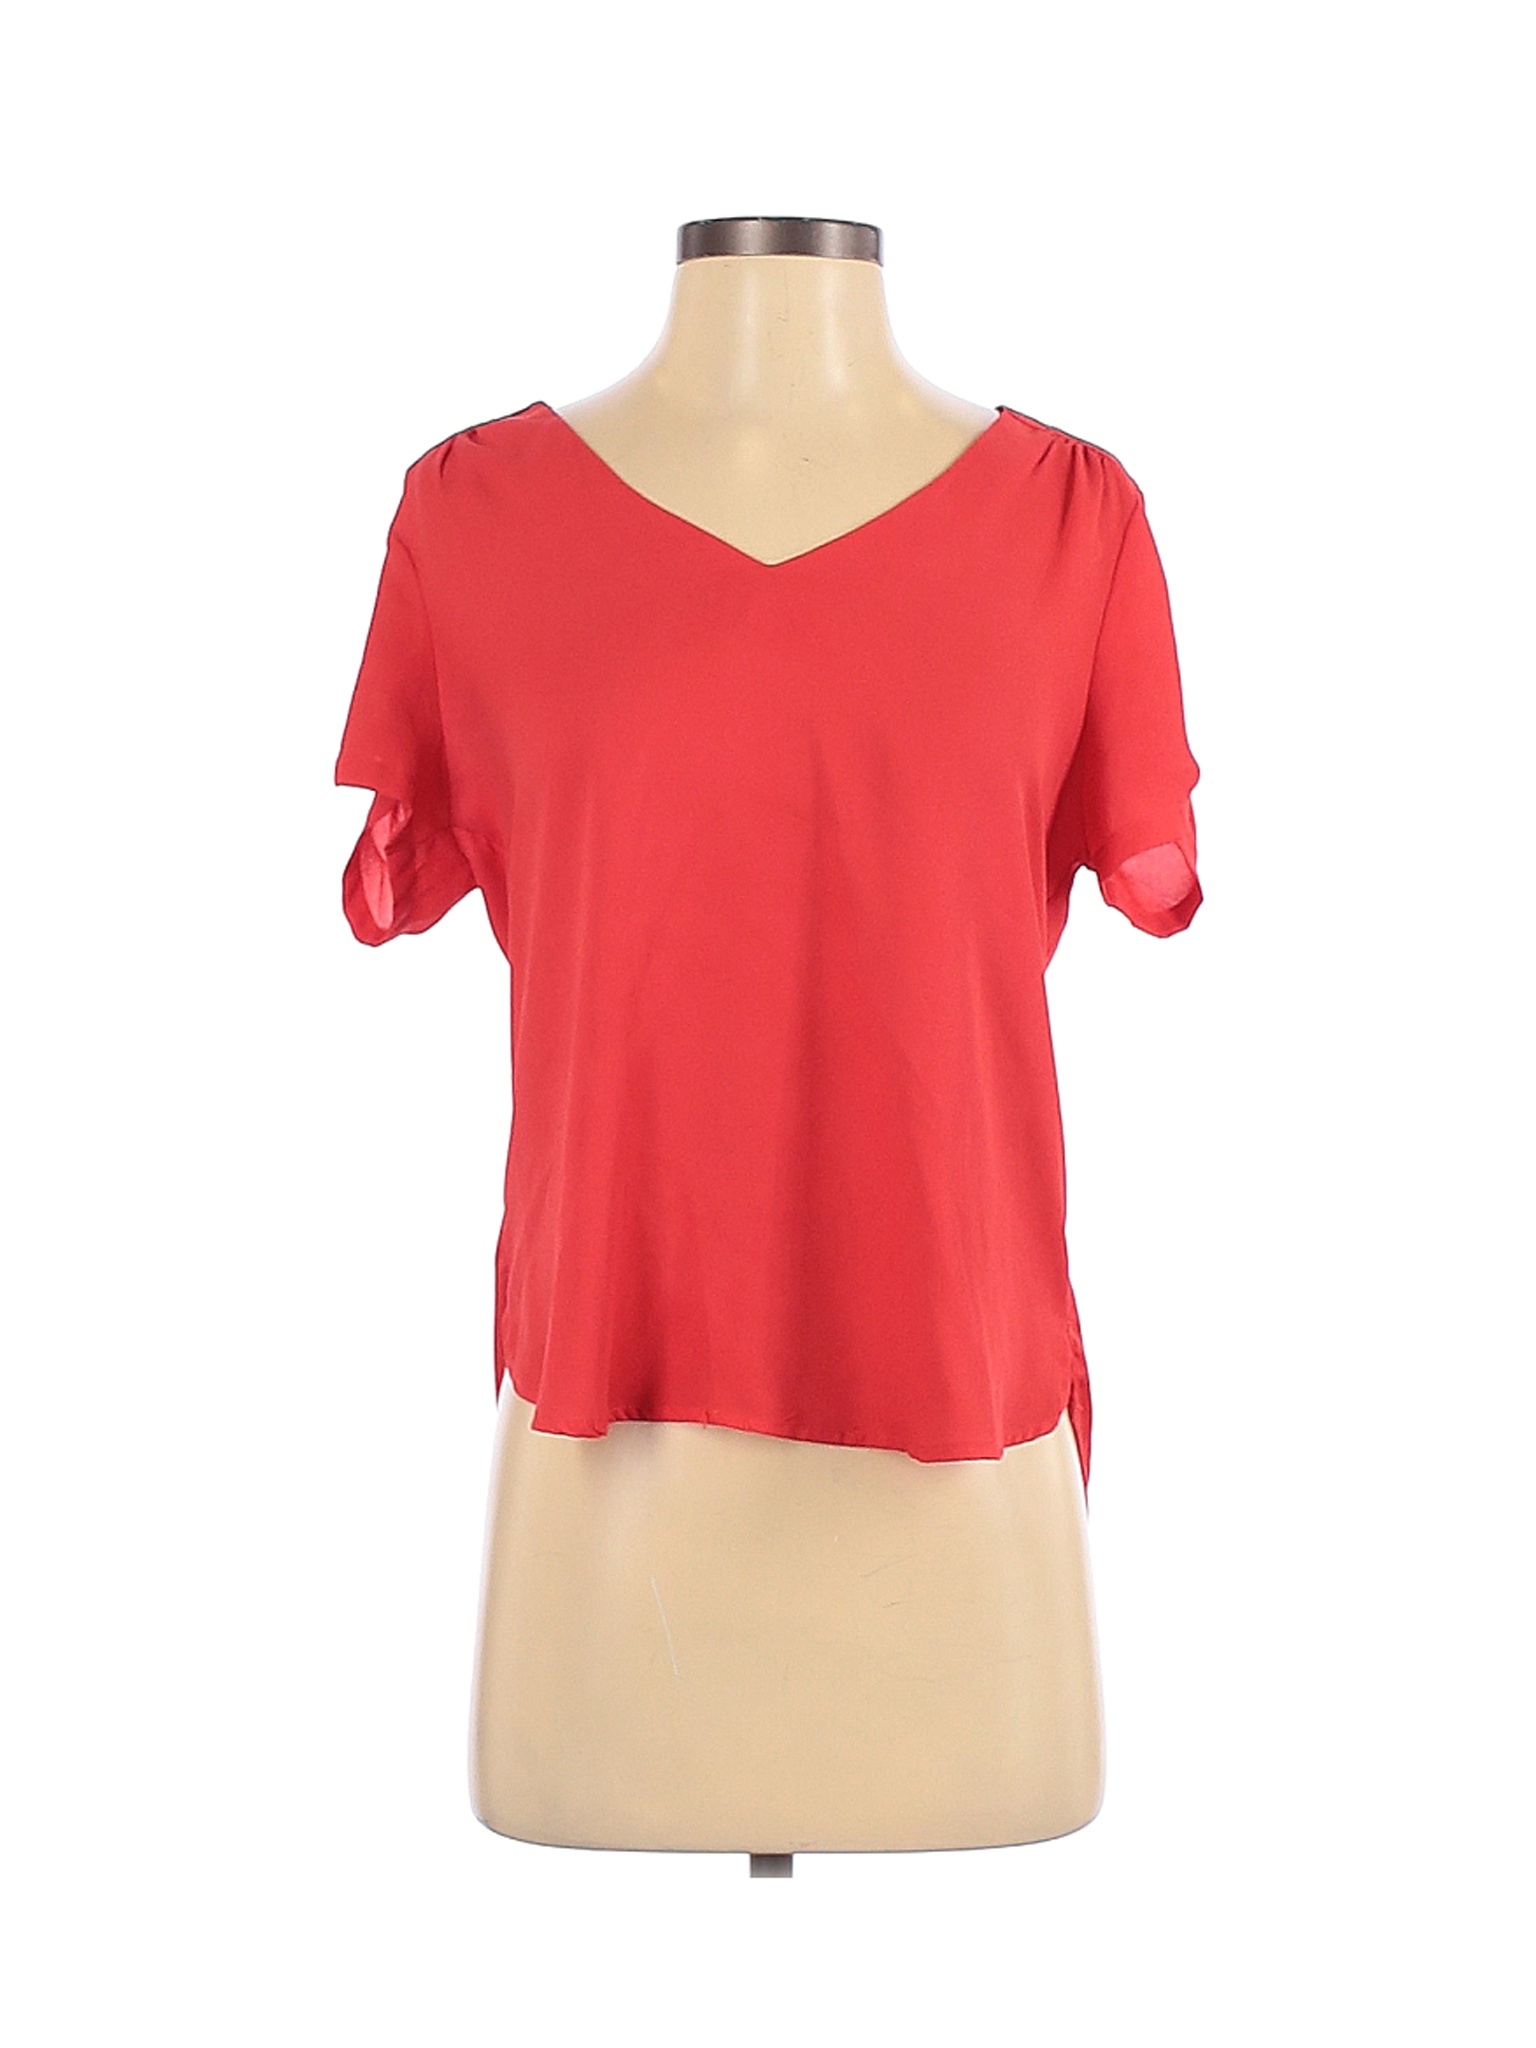 Meraki Women Red Short Sleeve Blouse S | eBay